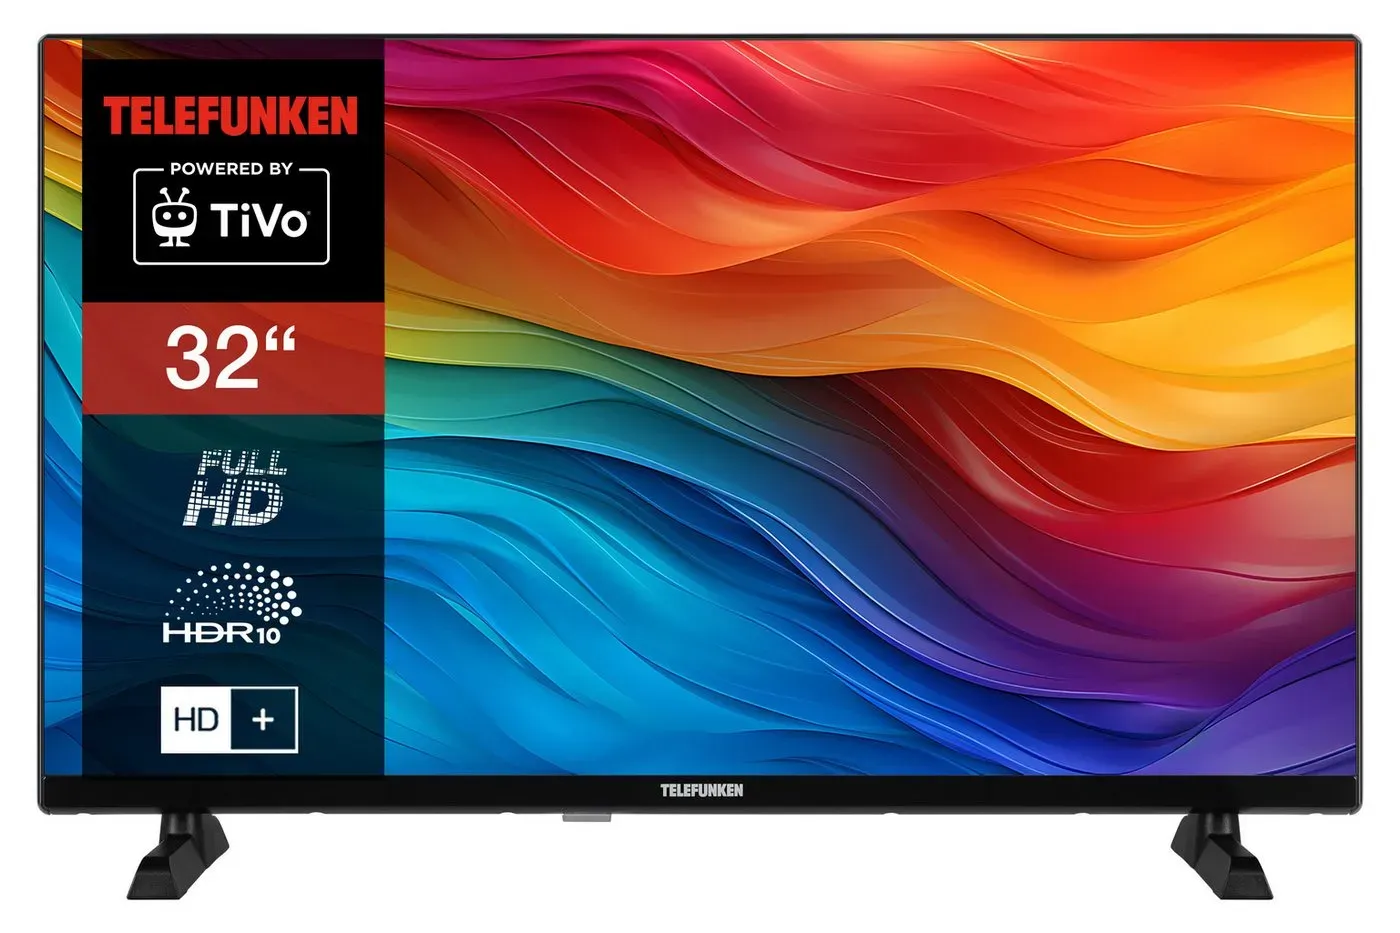 Telefunken XF32TO750S LCD-LED Fernseher (80 cm/32 Zoll, Full HD, TiVo Smart TV, TiVo Smart TV, HDR, Triple-Tuner, Sprachsteuerung, HD+ 6 Monate inkl) schwarz